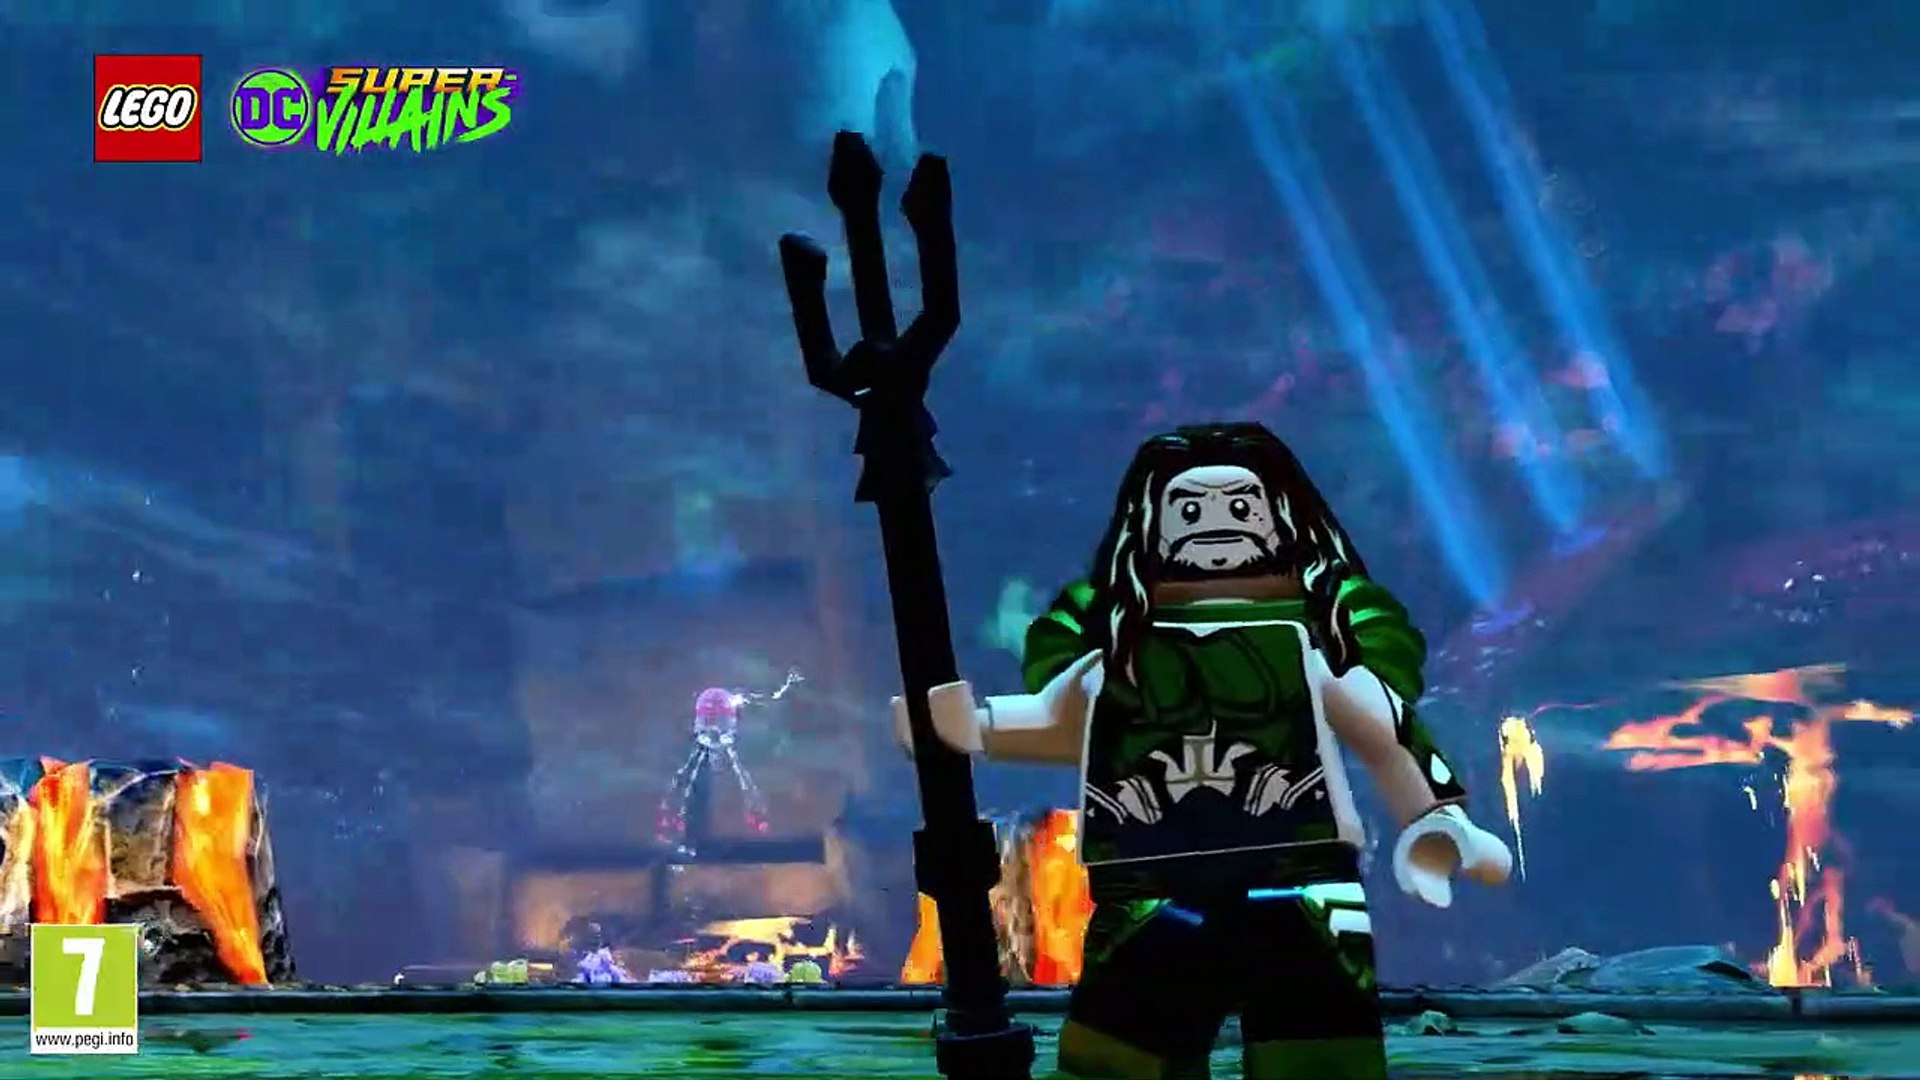 LEGO DC Super-Villains - Aquaman DLC 1 - Launch Trailer - video Dailymotion